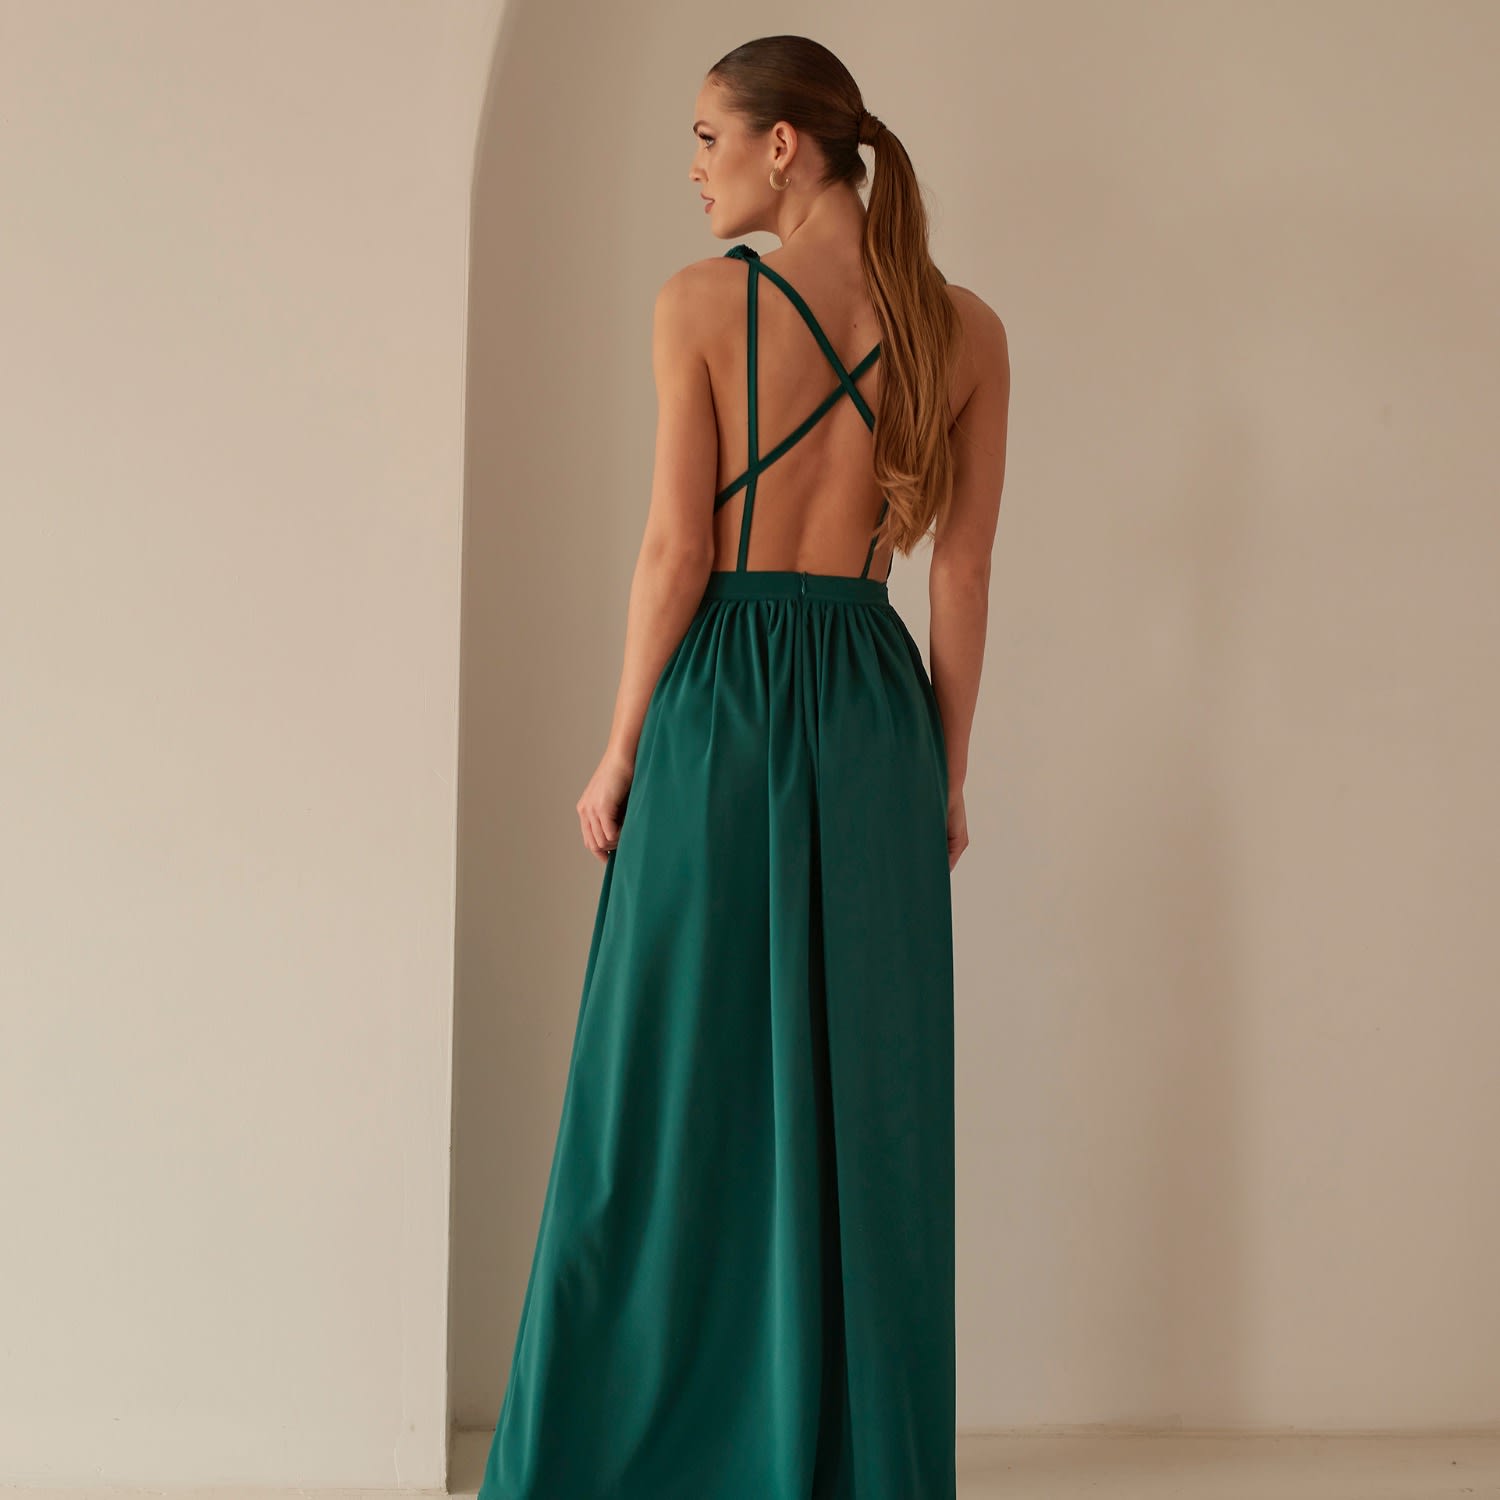 Soieblu Cara Maxi Dress in Emerald Green